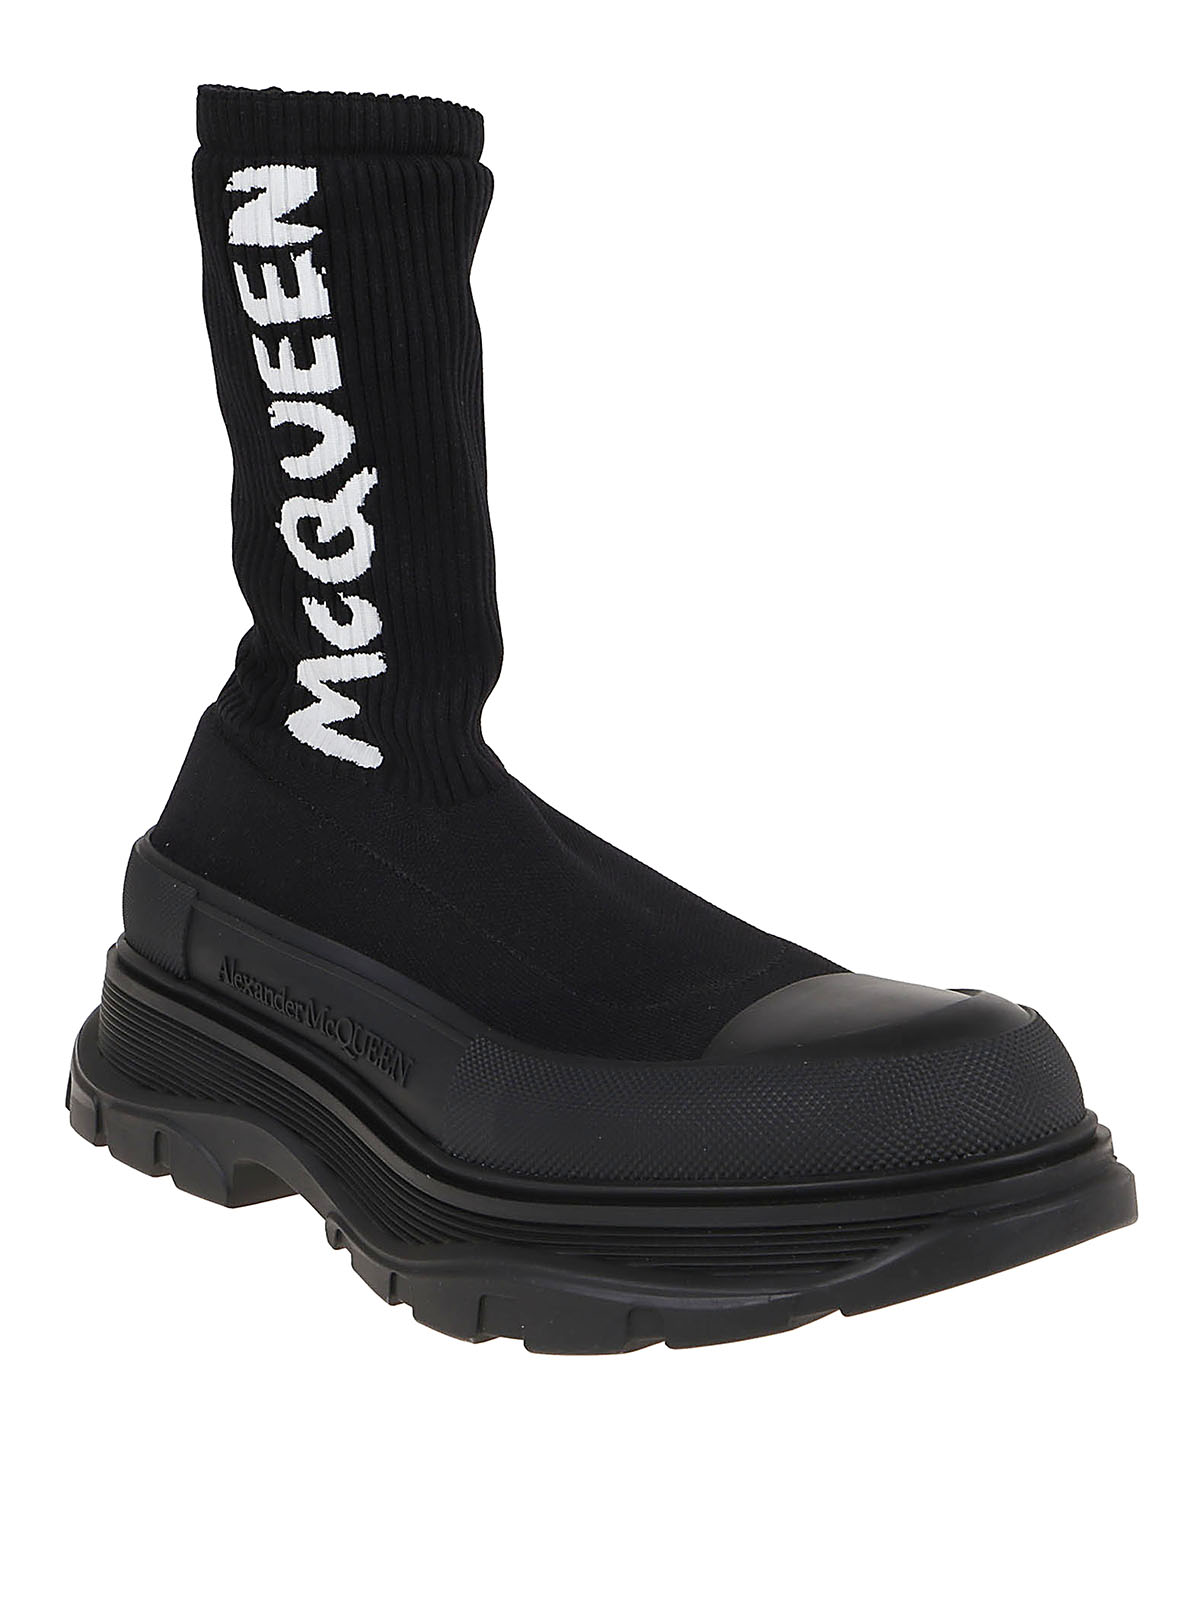 Tread Slick Boot in Black Size 41.5 by Alexander McQueen